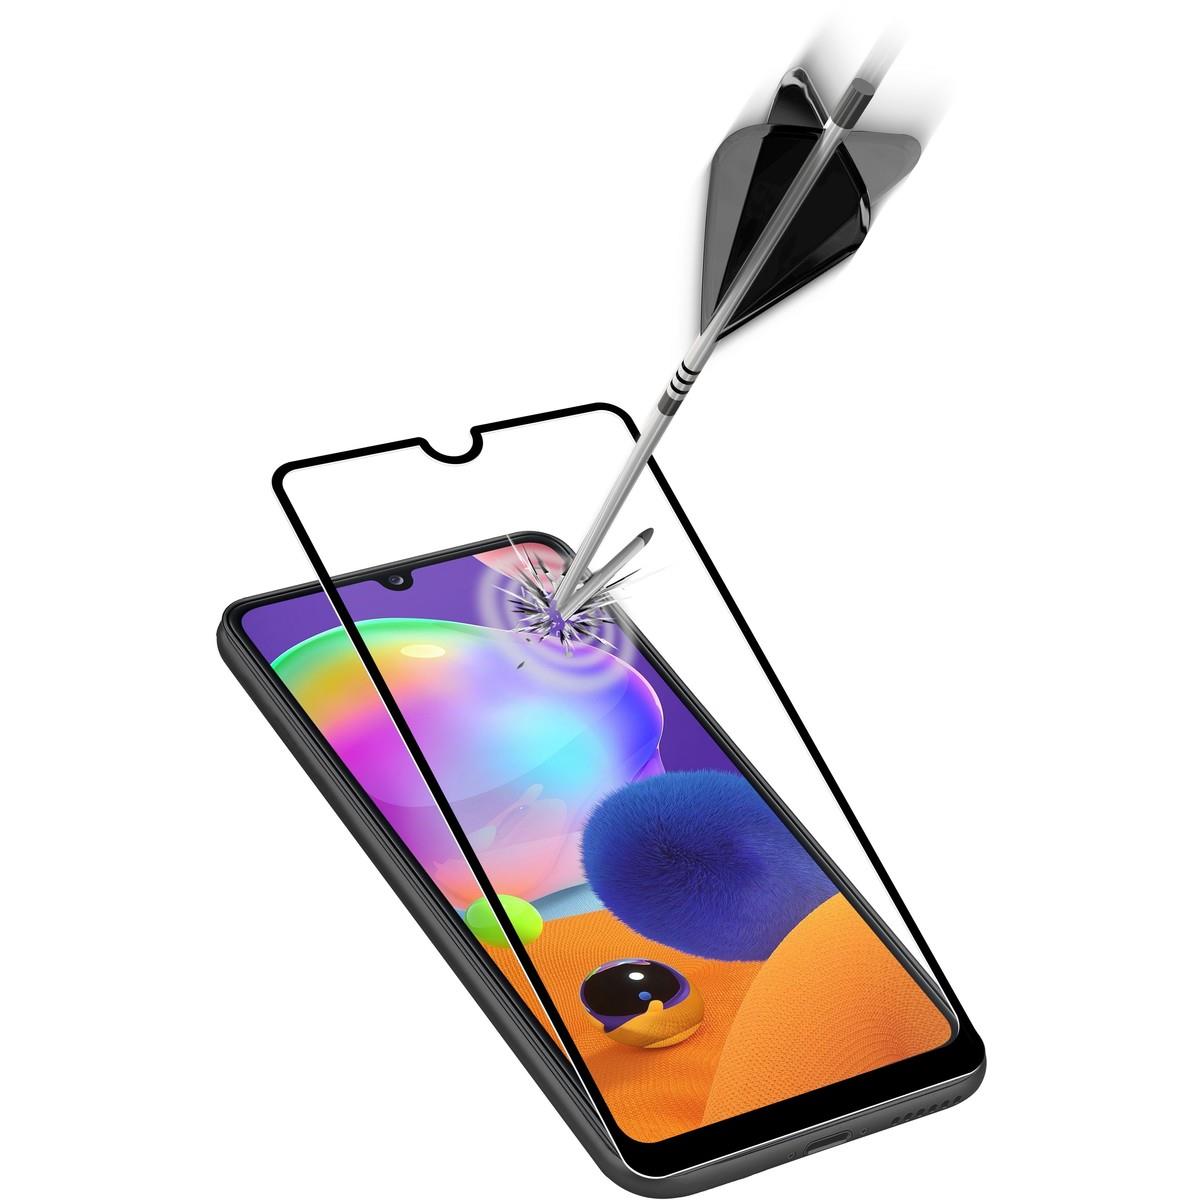 Schutzglas IMPACT GLASS CAPSULE für Samsung Galaxy A31